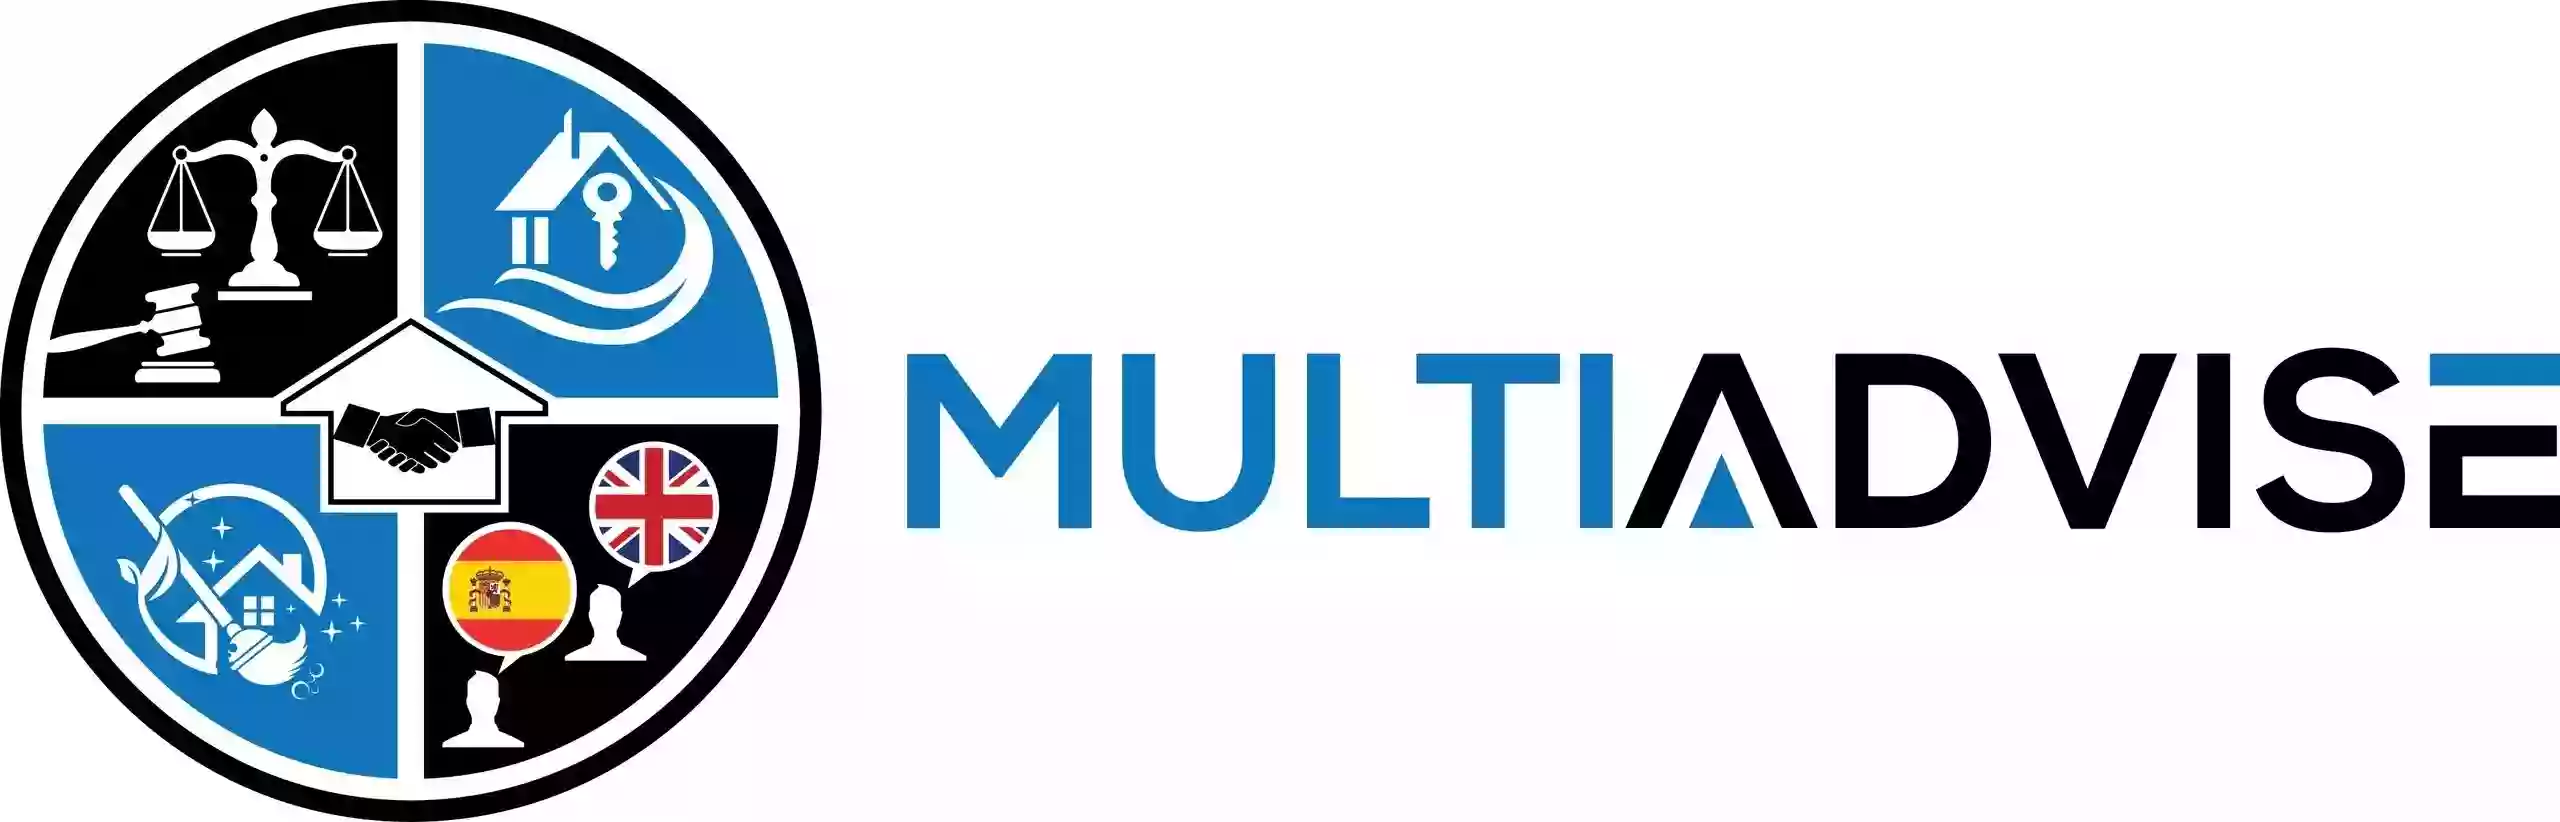 MultiAdvise Property Management (Real Estate & Holidayrental) & Multiservices